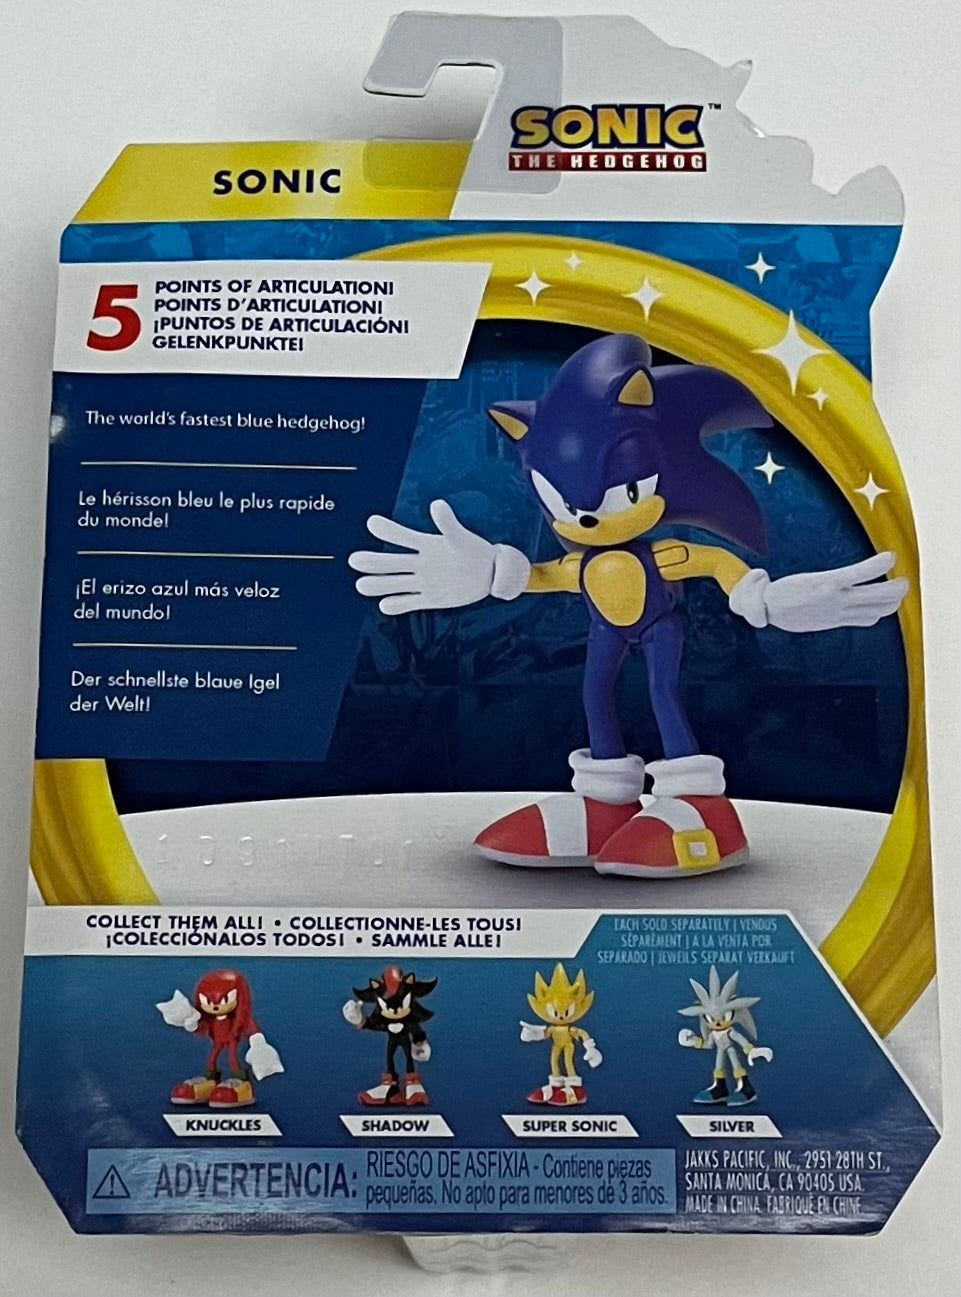 Jakks Sonic 2.5" Inch Articulated Figure Wave 4 Sonic